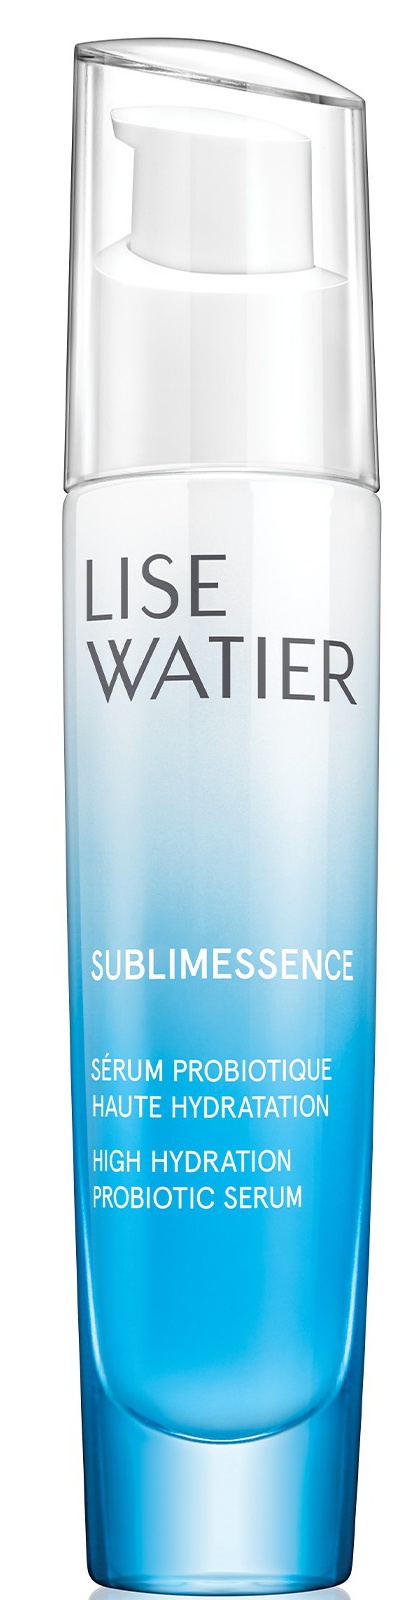 Lise Watier Sublimessence High Hydration Probiotic Serum